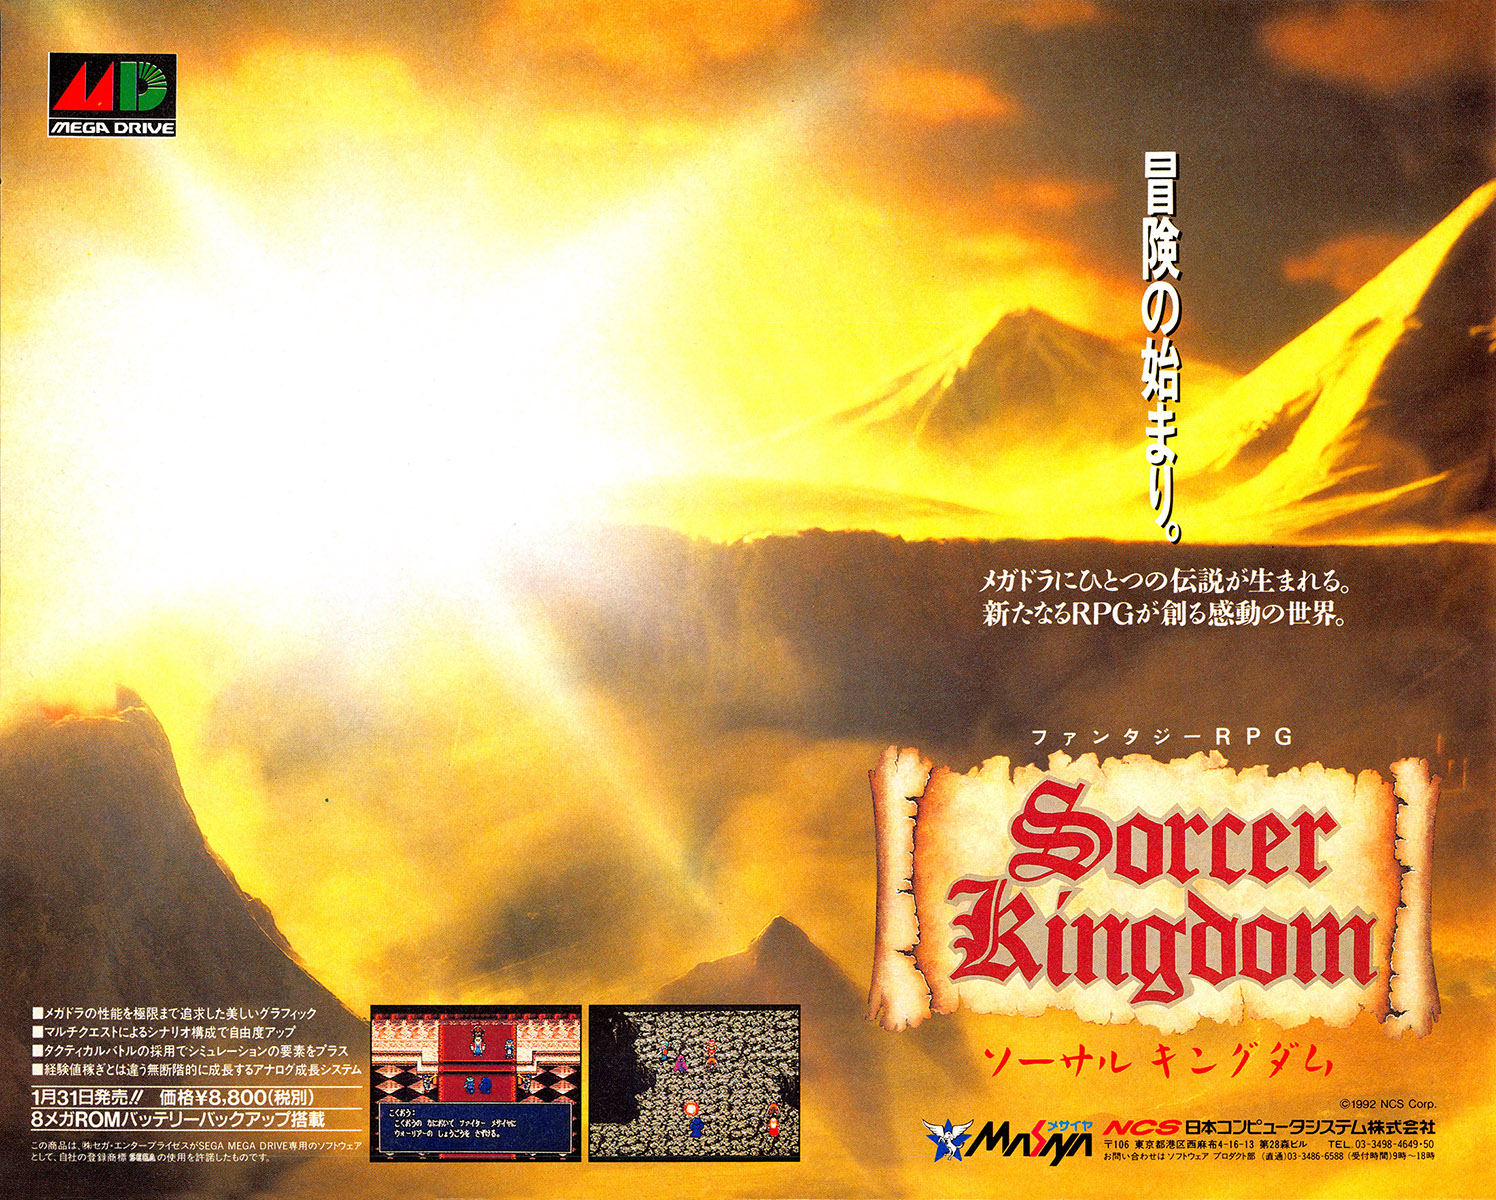 Sorcerer S Kingdom Sorcer Kingdom Japan Sega Genesis Retromags Community